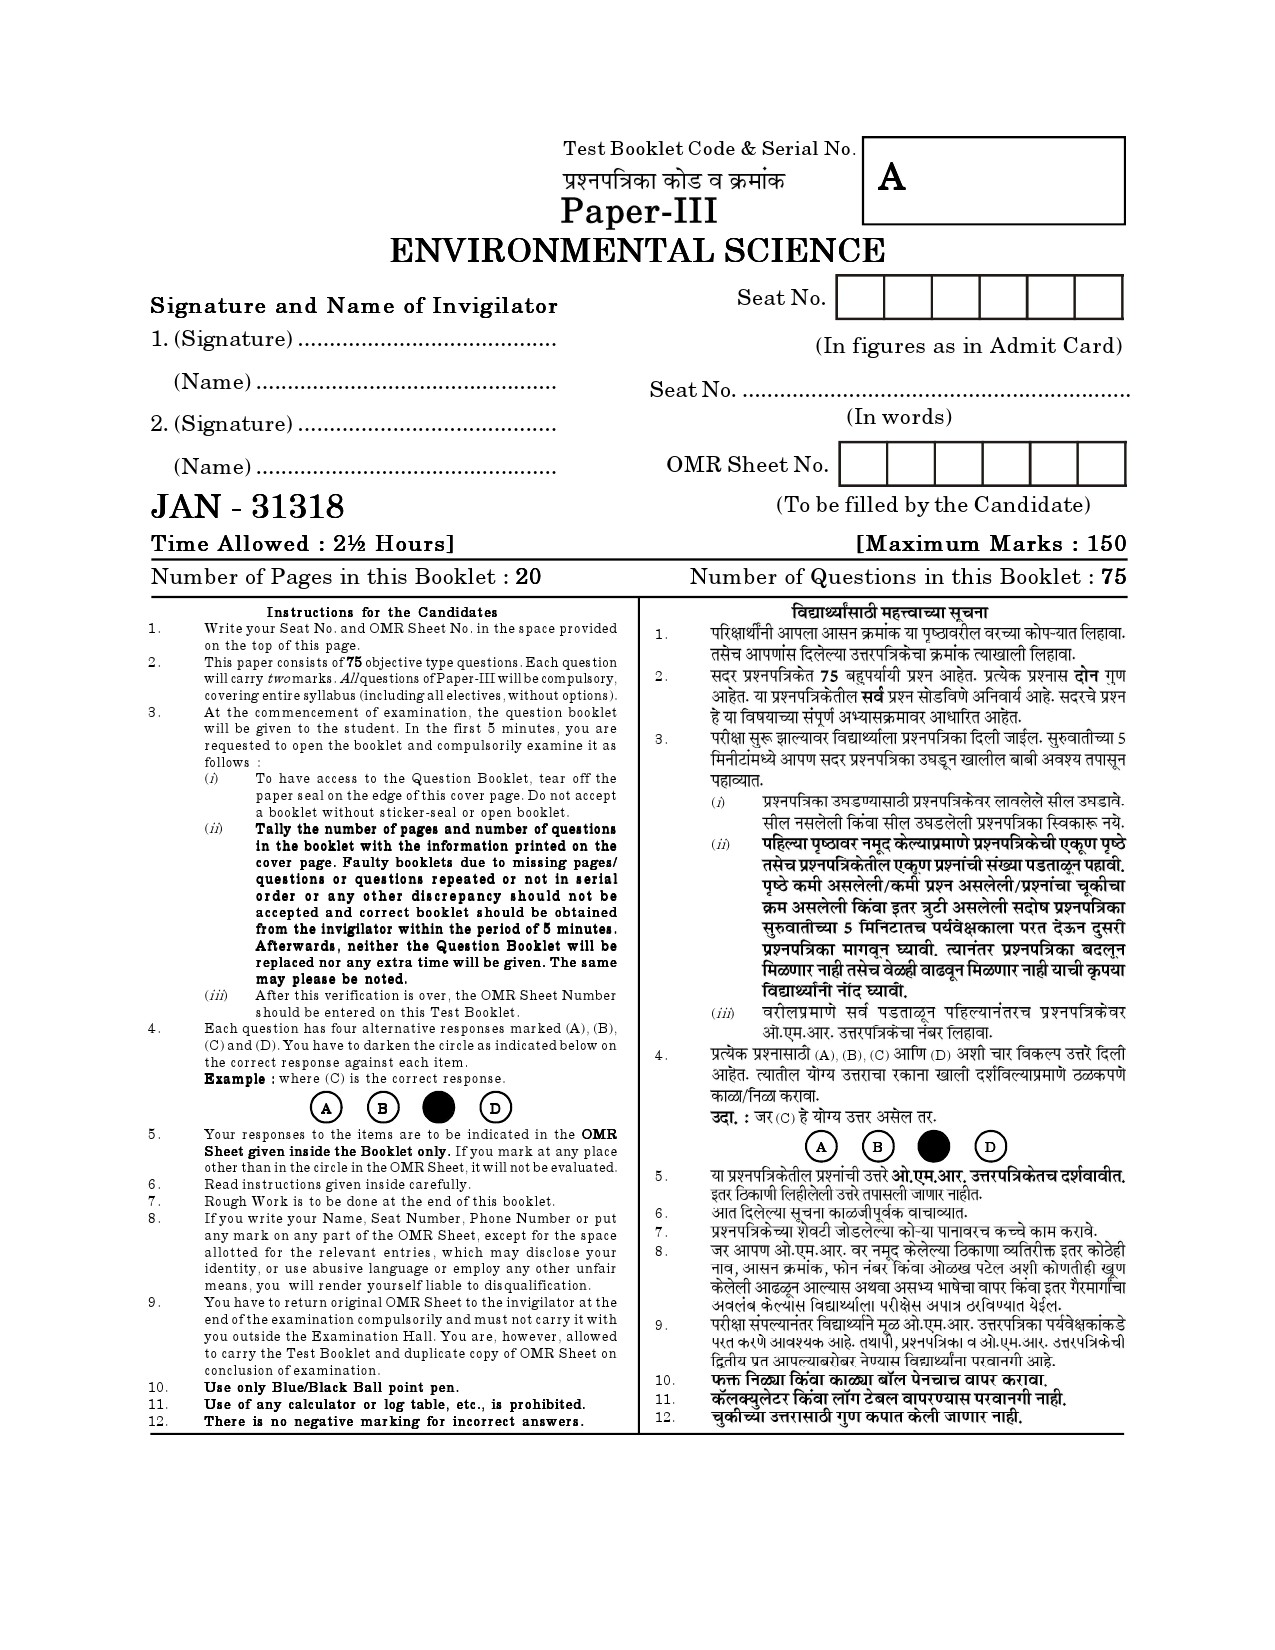 Maharashtra SET Environmental Sciences Question Paper III January 2018 1